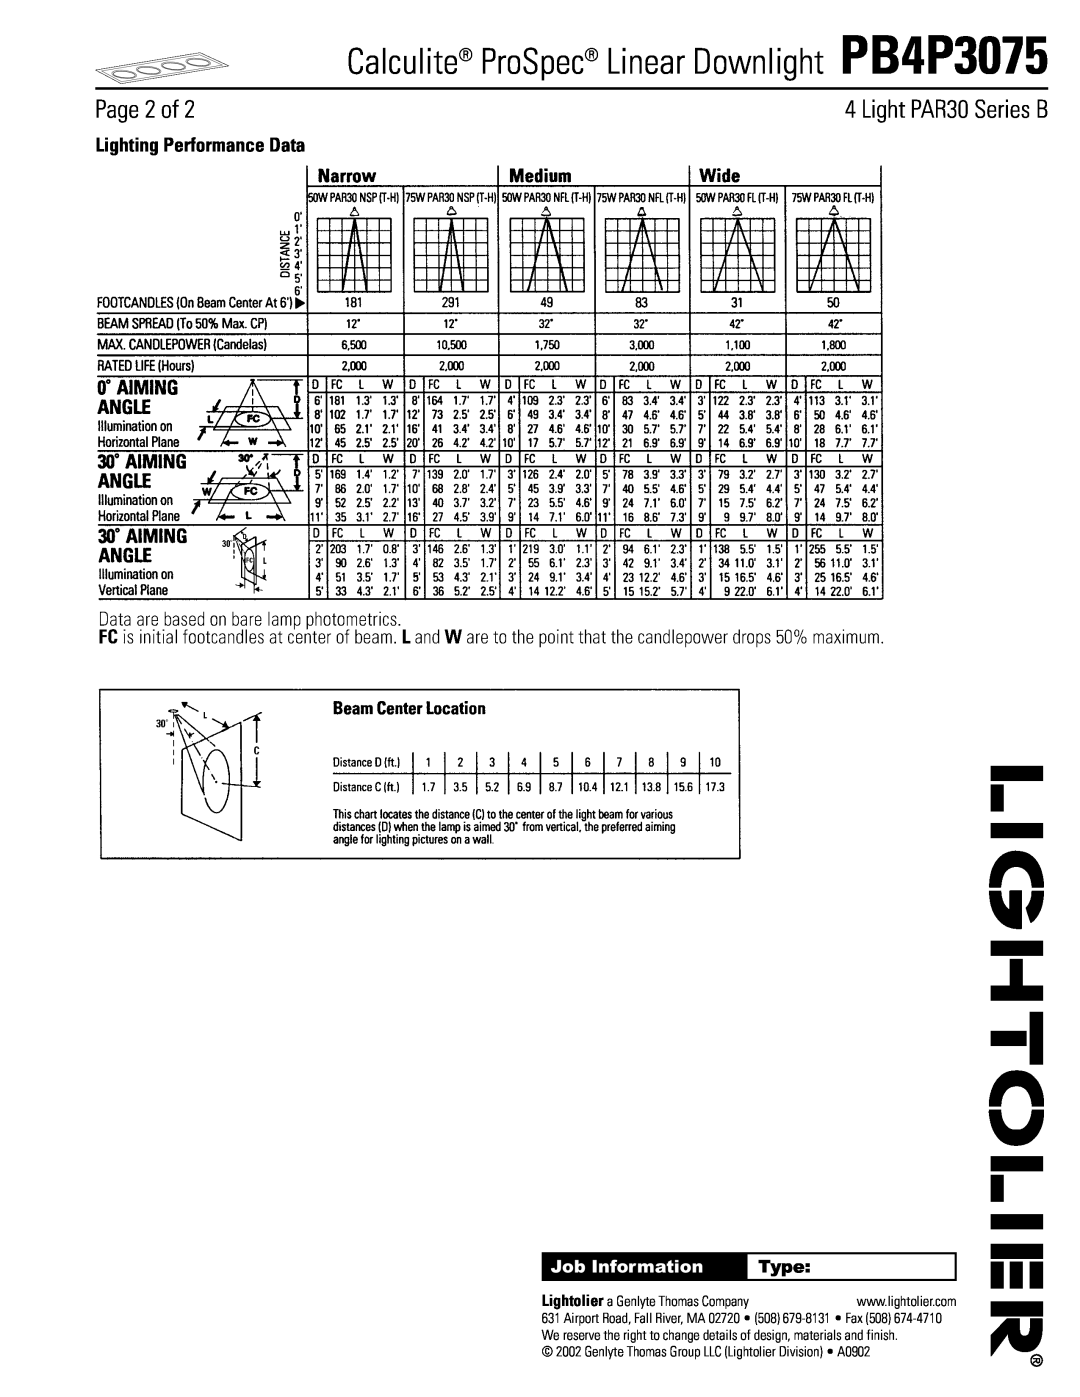 Lightolier Lighting Performance Data, Type, Calculite ProSpec Linear Downlight PB4P3075, Page 2 of, Job Information 